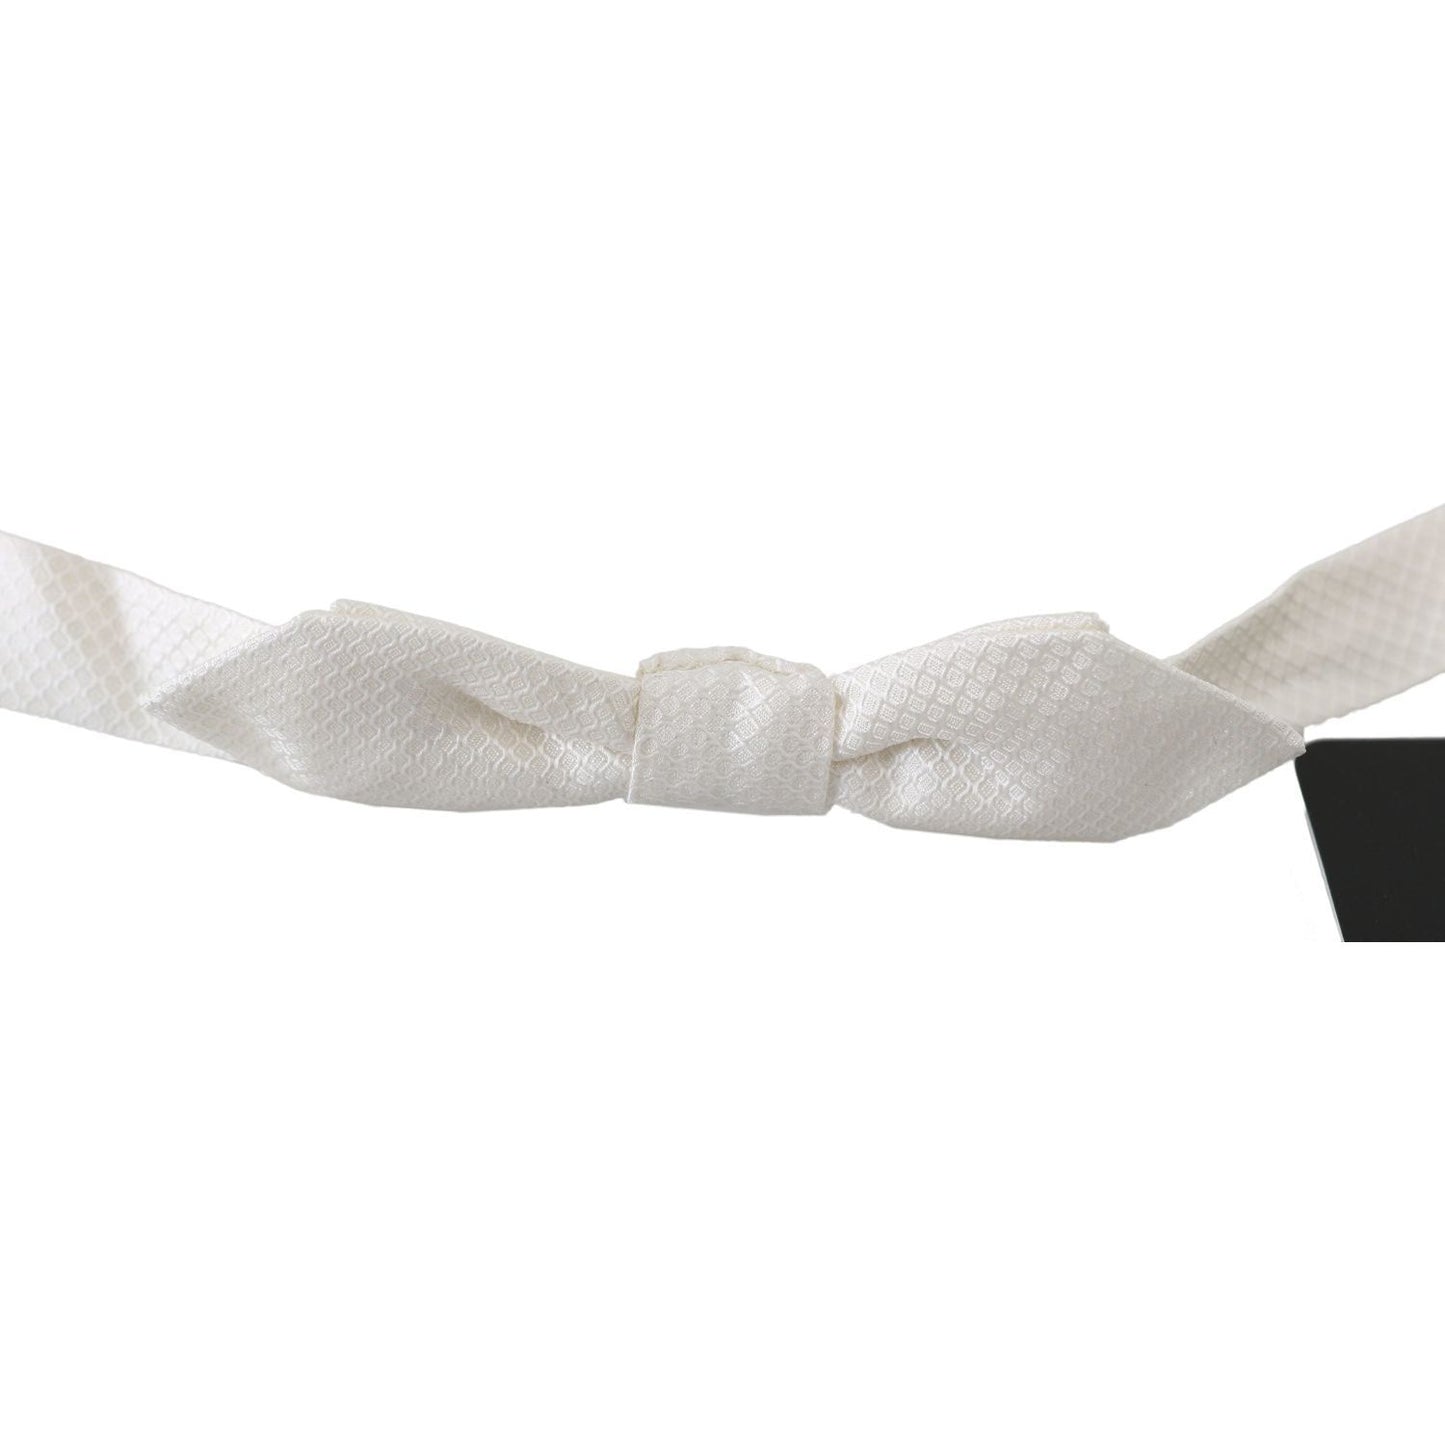 Dolce & Gabbana Elegant White Silk Bow Tie white-100-silk-slim-adjustable-neck-papillon-men-tie Bow Tie IMG_3989-scaled.jpg